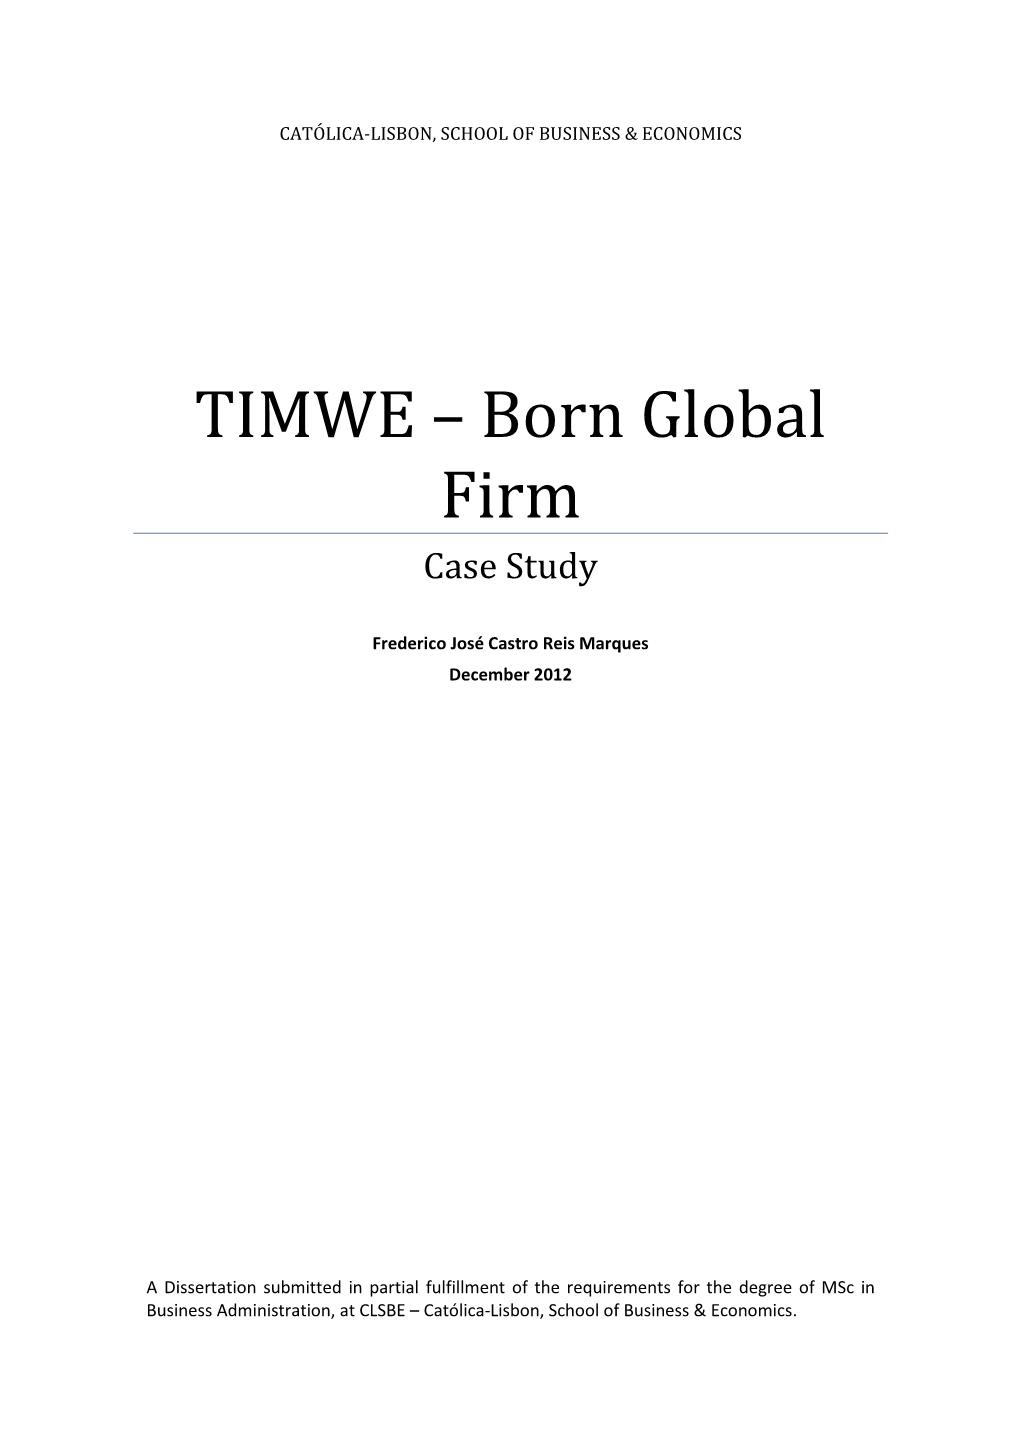 TIMWE – Born Global Firm Case Study